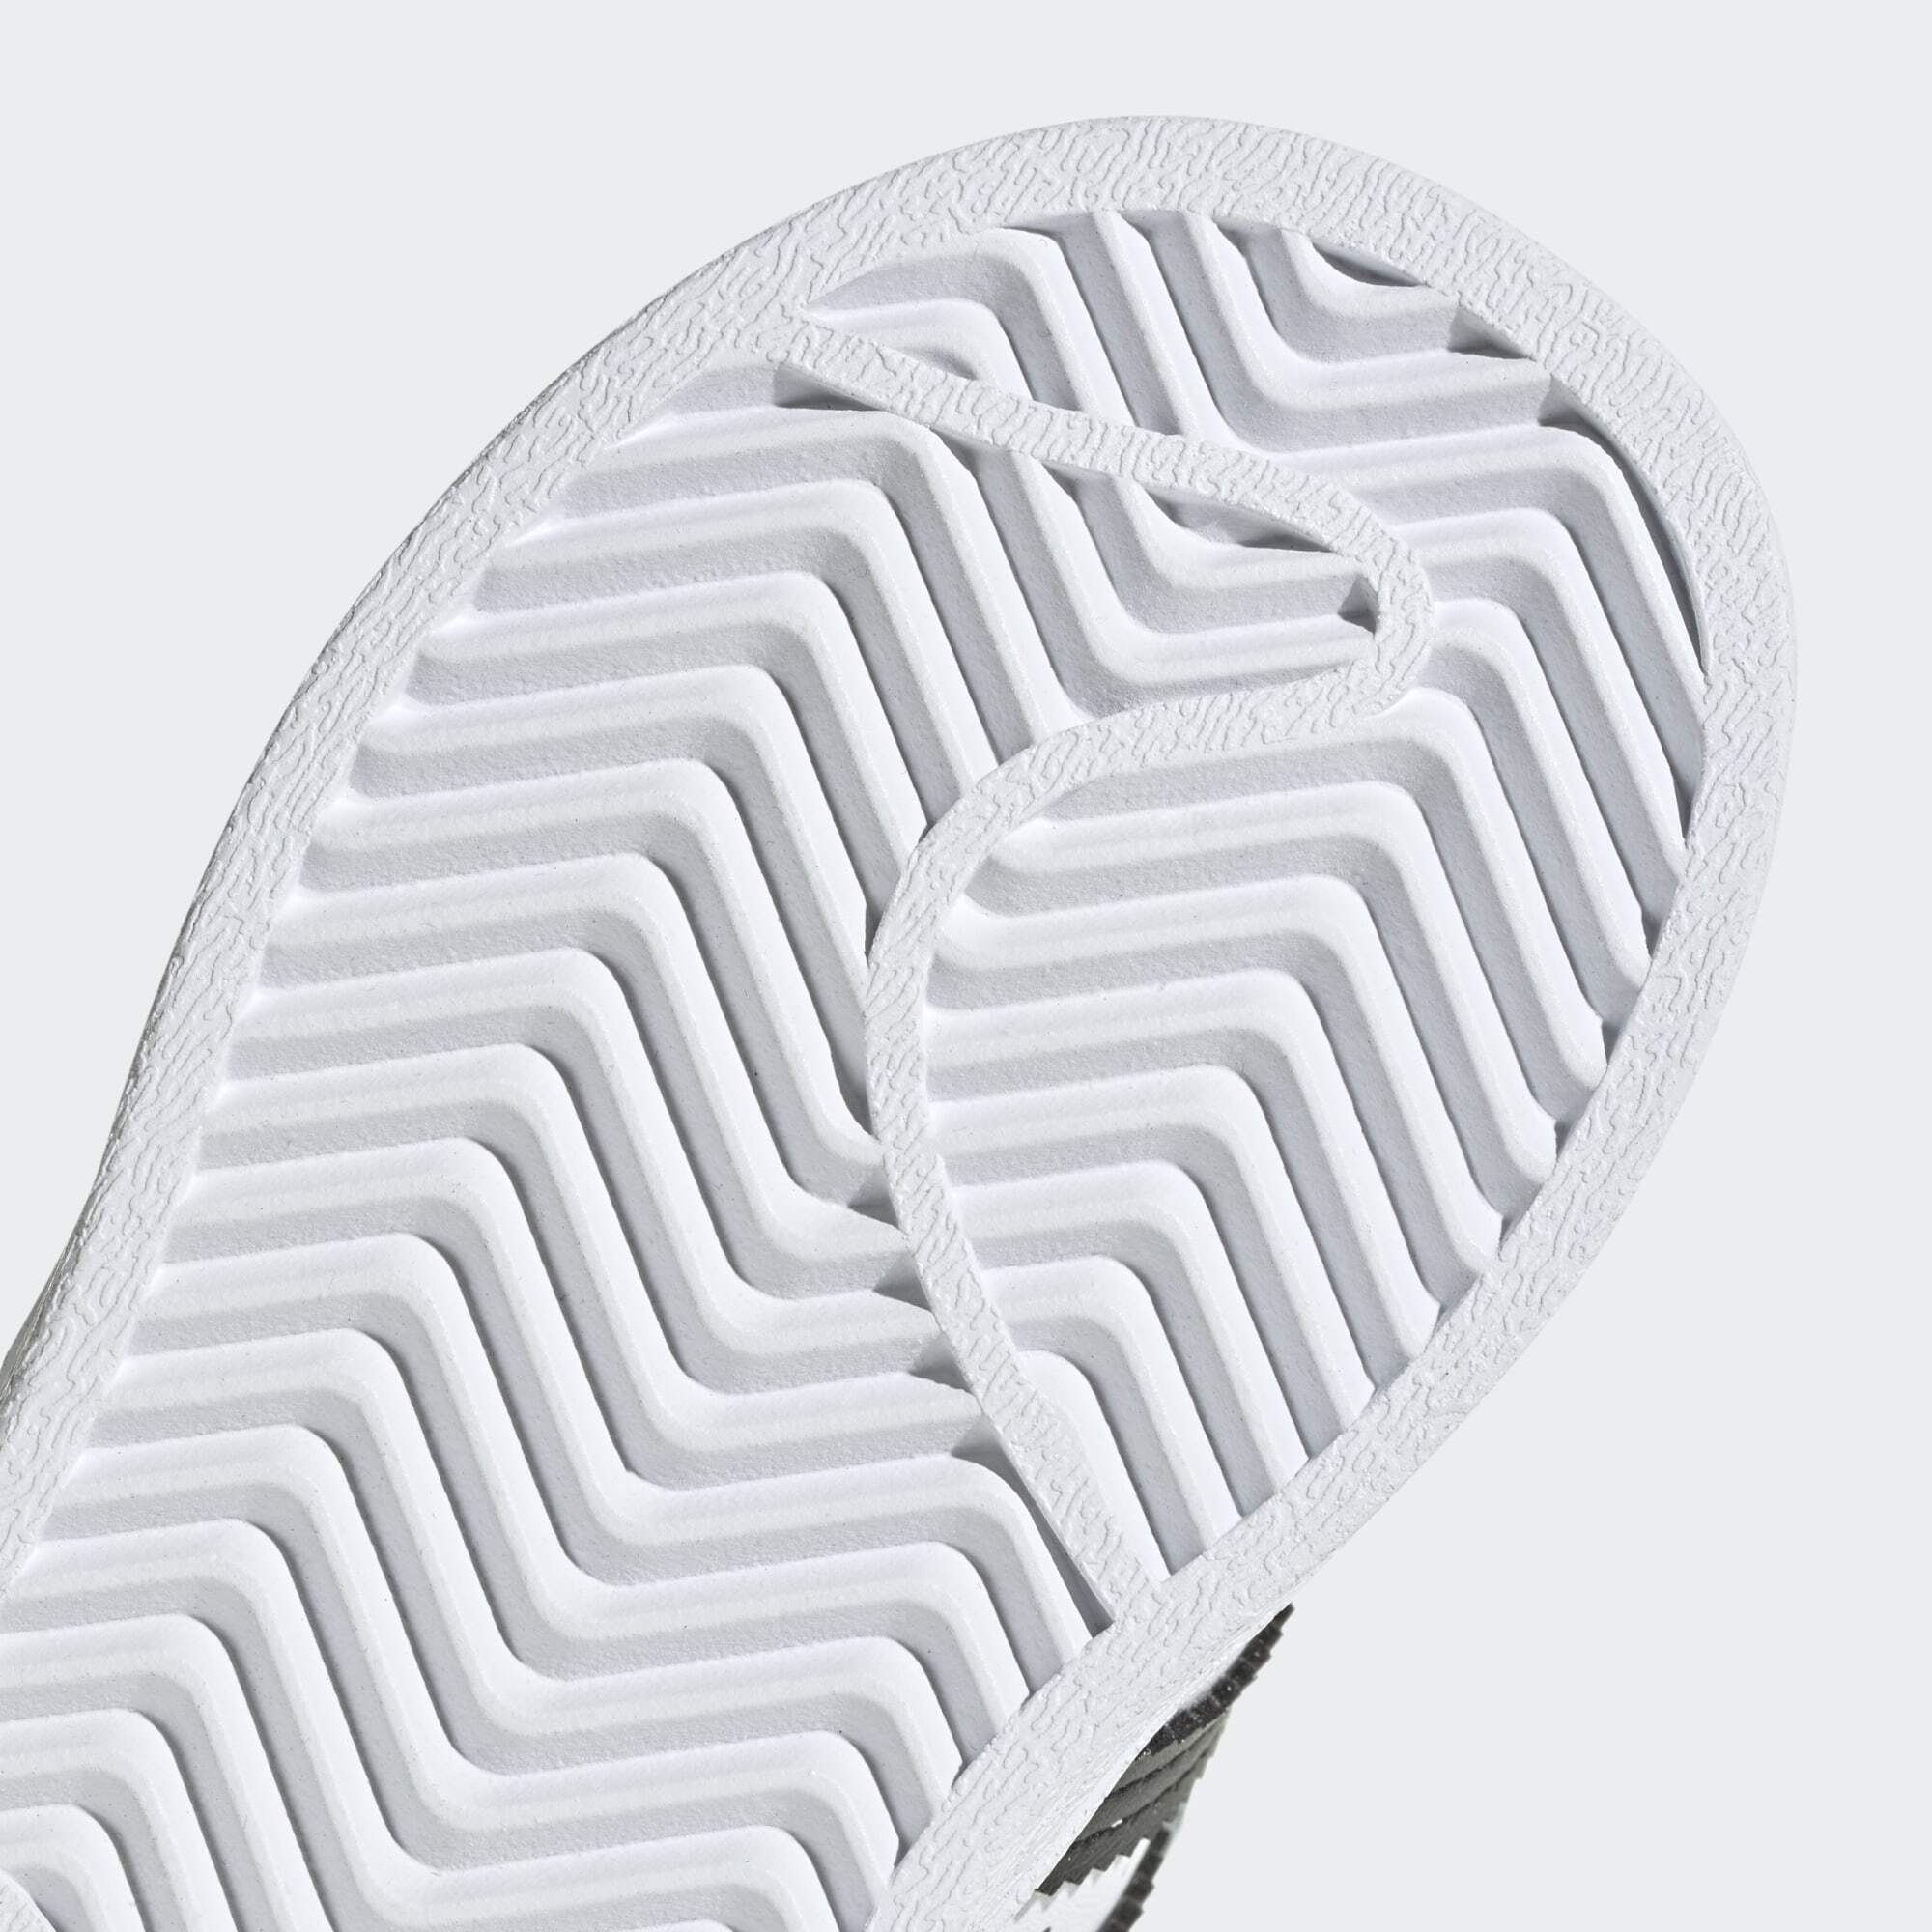 adidas Originals SUPERSTAR SCHUH Cloud Sneaker White Cloud White Core / / Black